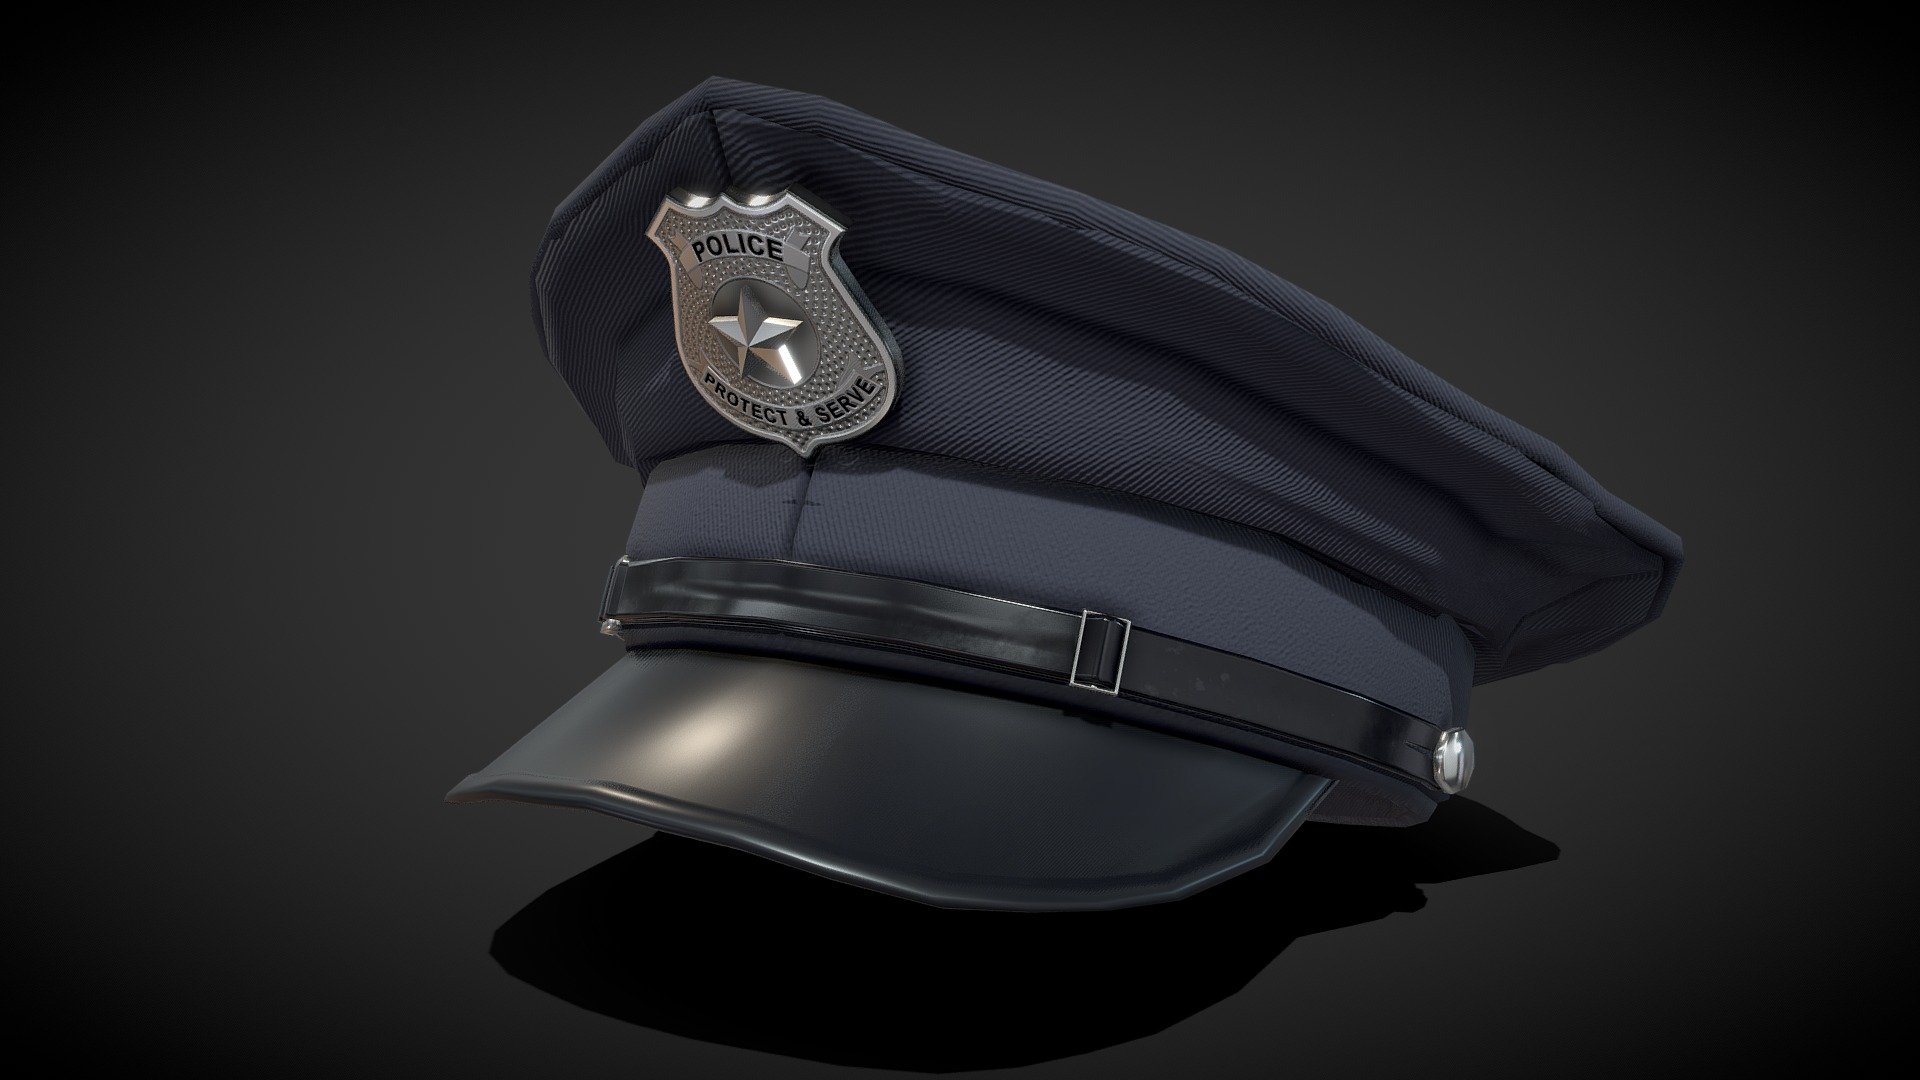 Police Officer Cap / Hat - low poly

Triangles: 5.2k
Vertices: 2.9k

4096x4096 PNG texture

Hats - Headwear &lt;&lt; - Police Officer Cap / Hat - low poly - Buy Royalty Free 3D model by Karolina Renkiewicz (@KarolinaRenkiewicz) 3d model